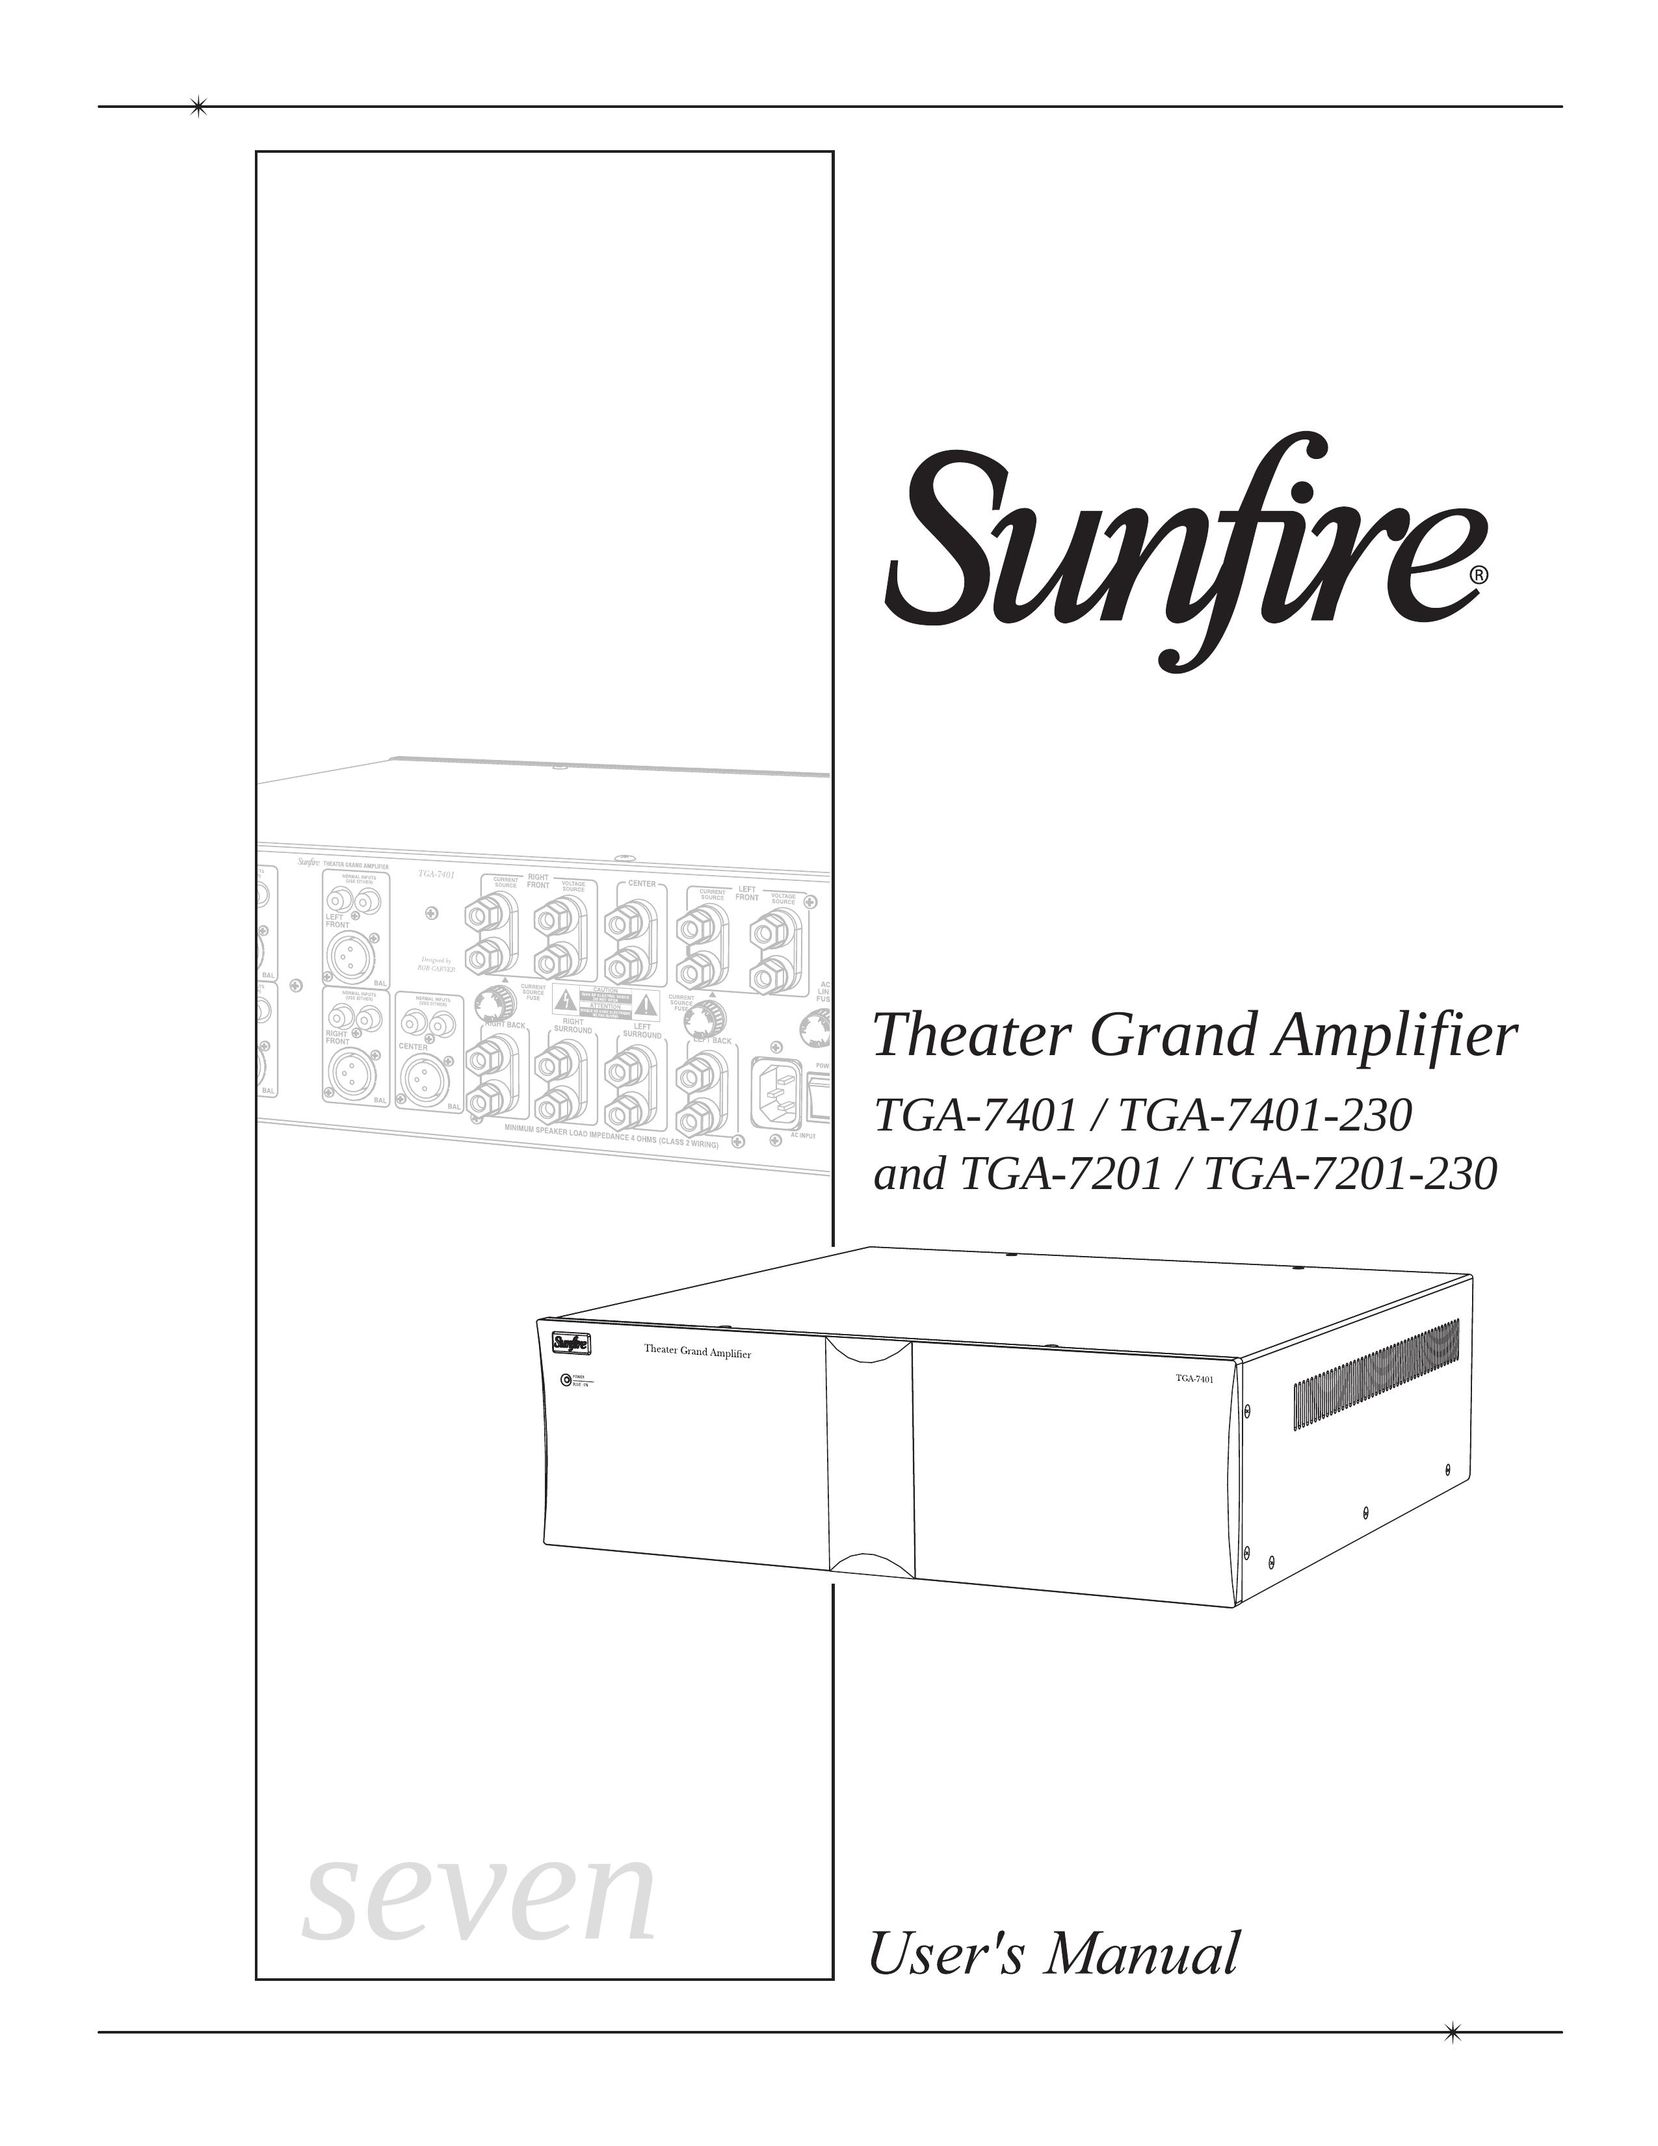 Sunfire TGA7401 Stereo System User Manual